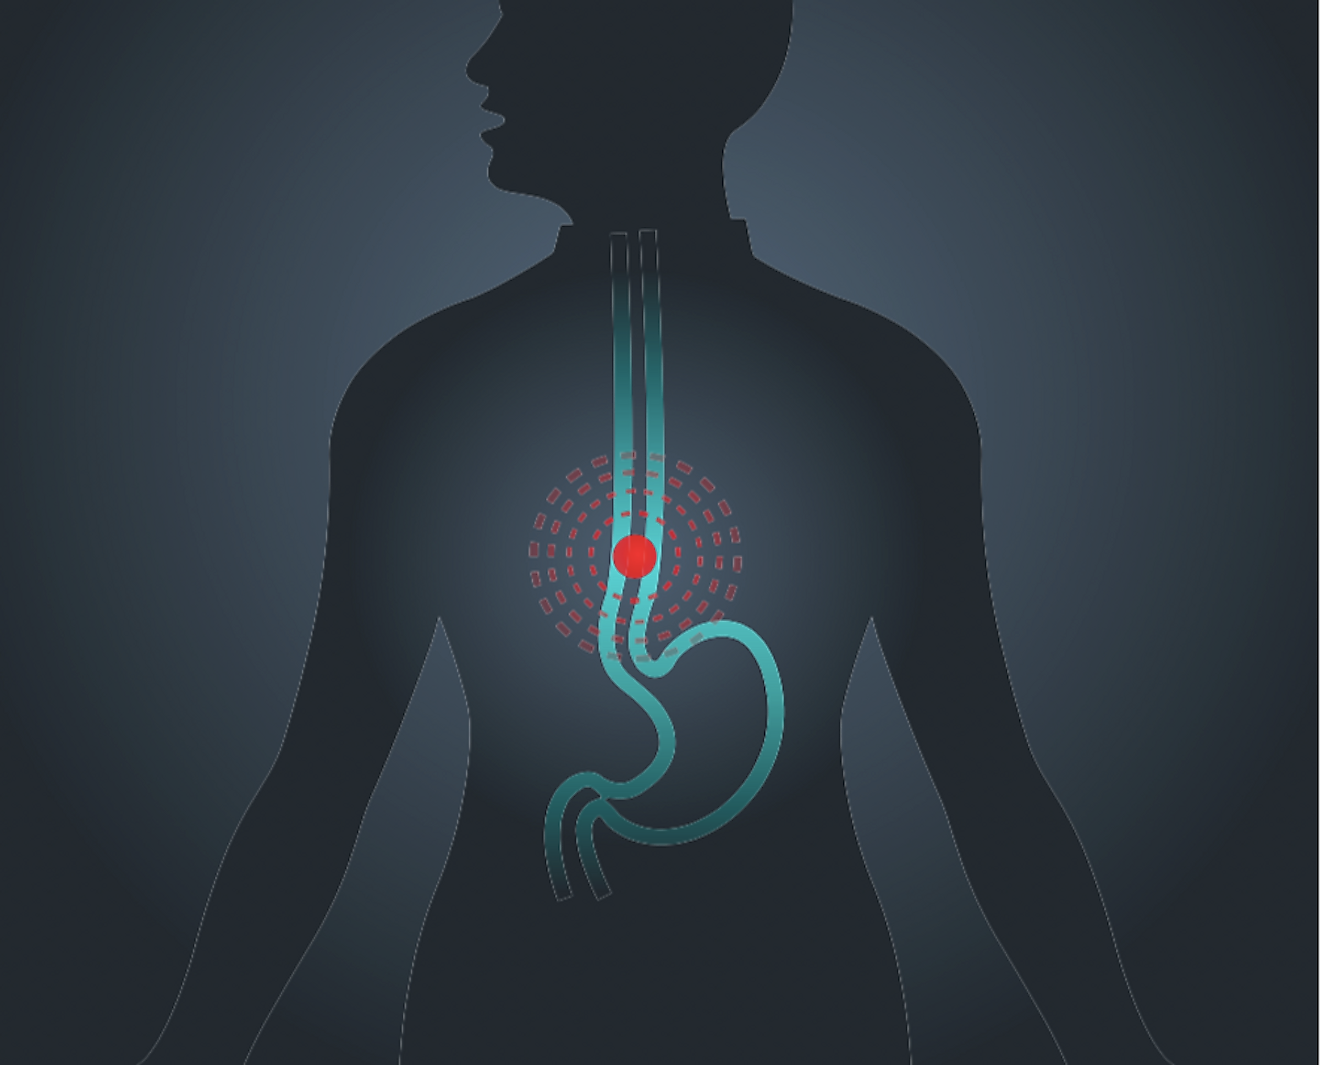 Esophageal Cancer illustration. Image credit: iLoveCoffeeDesign/Shutterstock.com